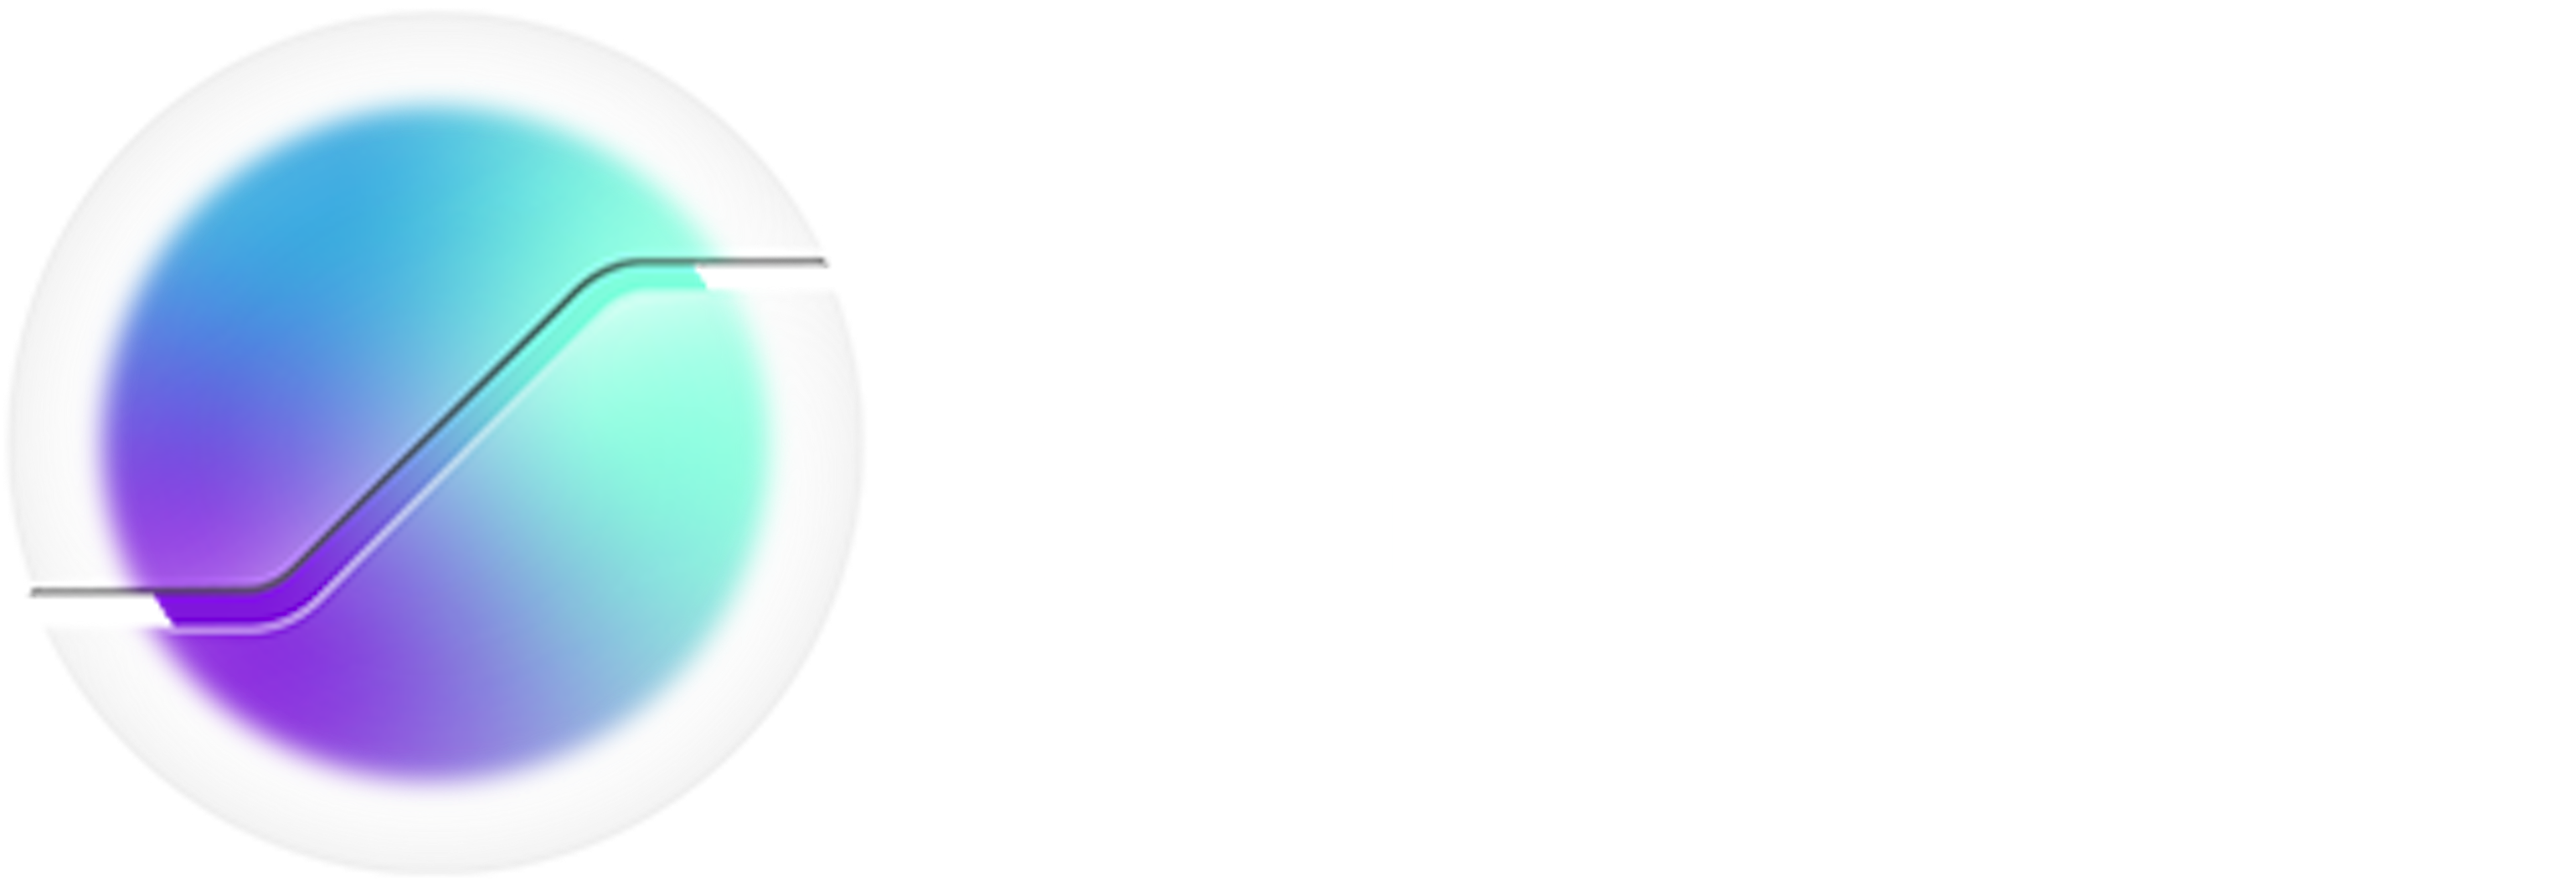 Shieldoo